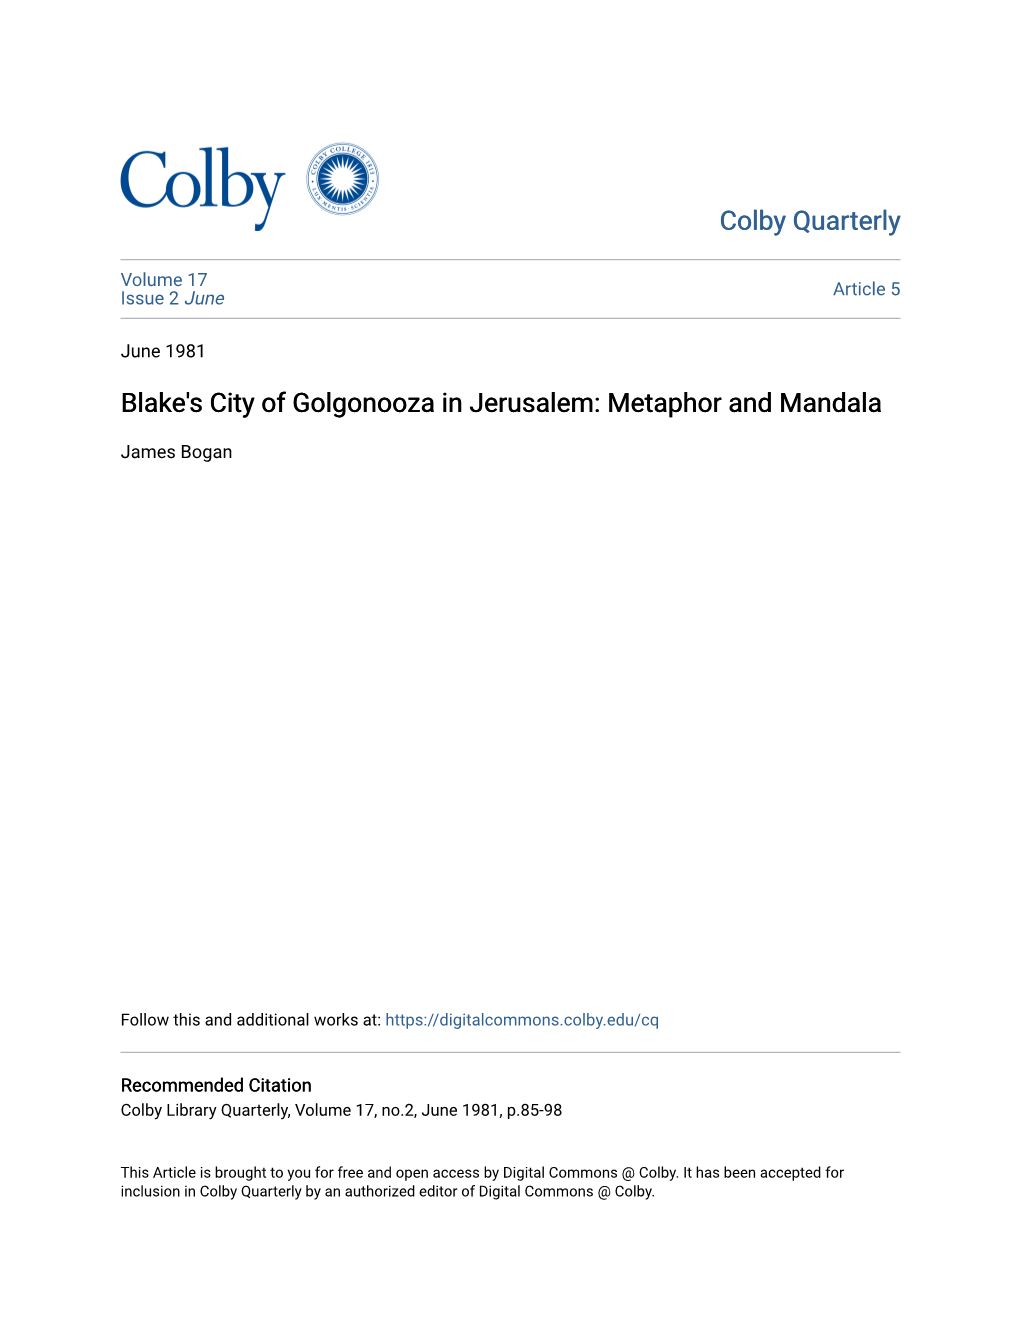 Blake's City of Golgonooza in Jerusalem: Metaphor and Mandala